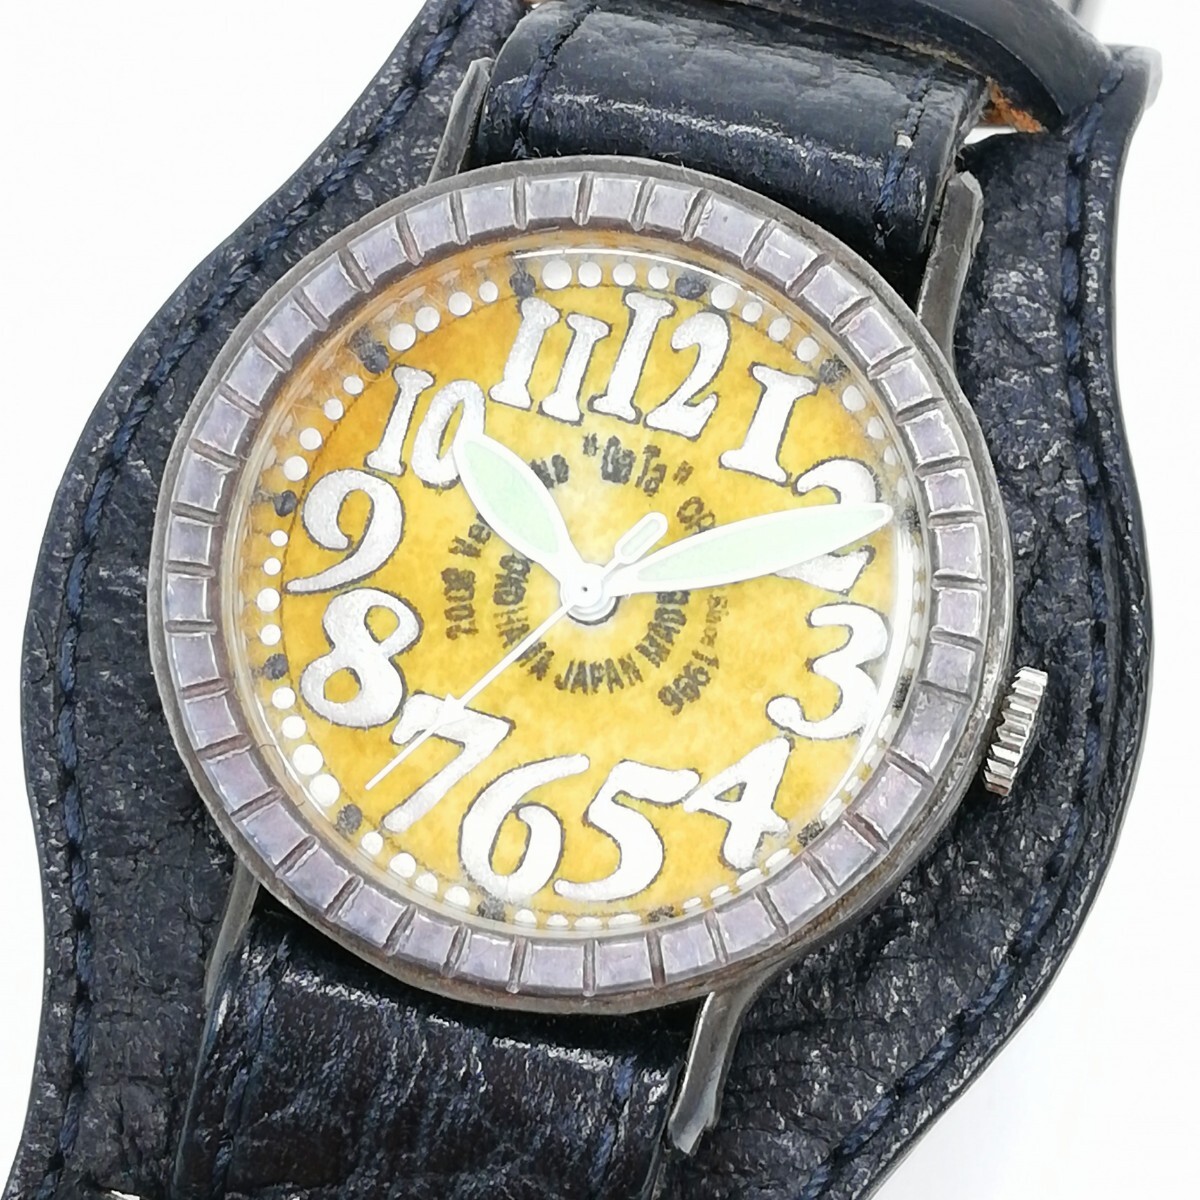 231 GaTa watch smith rattling hand made wristwatch analogue quartz antique manner handcraft men's yellow face operation not yet verification 